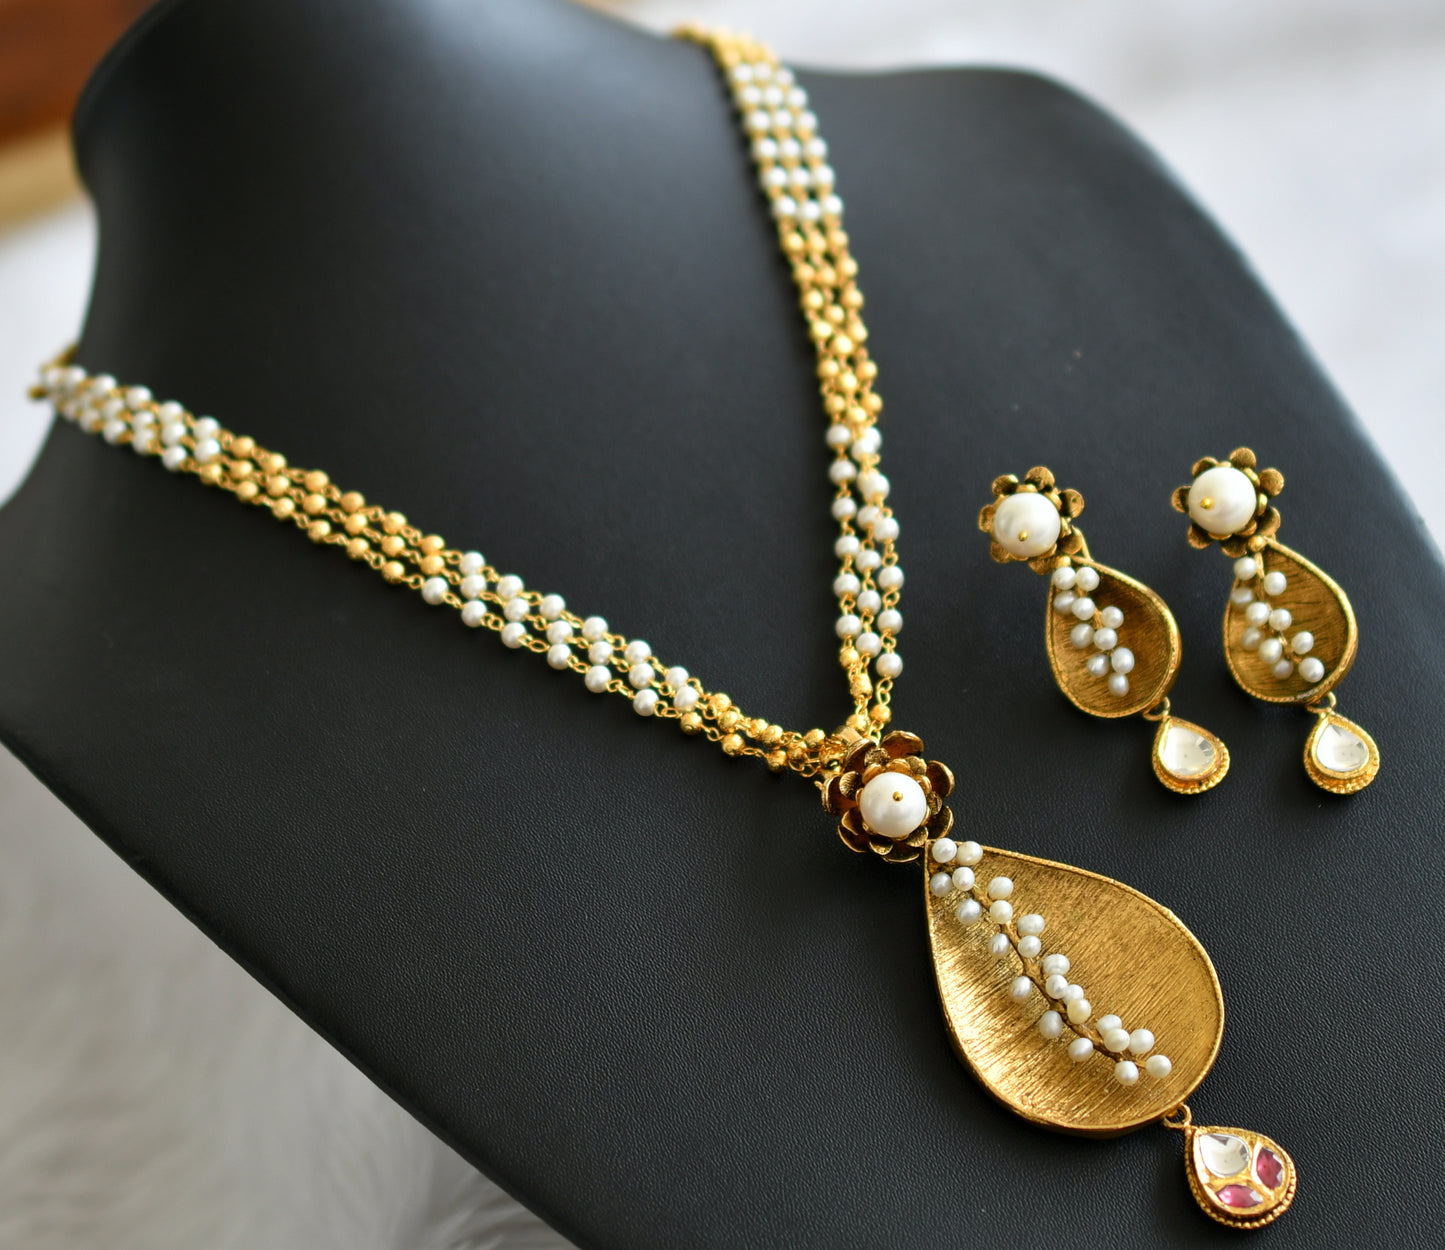 Antique gold tone replica pearl necklace set dj-44239